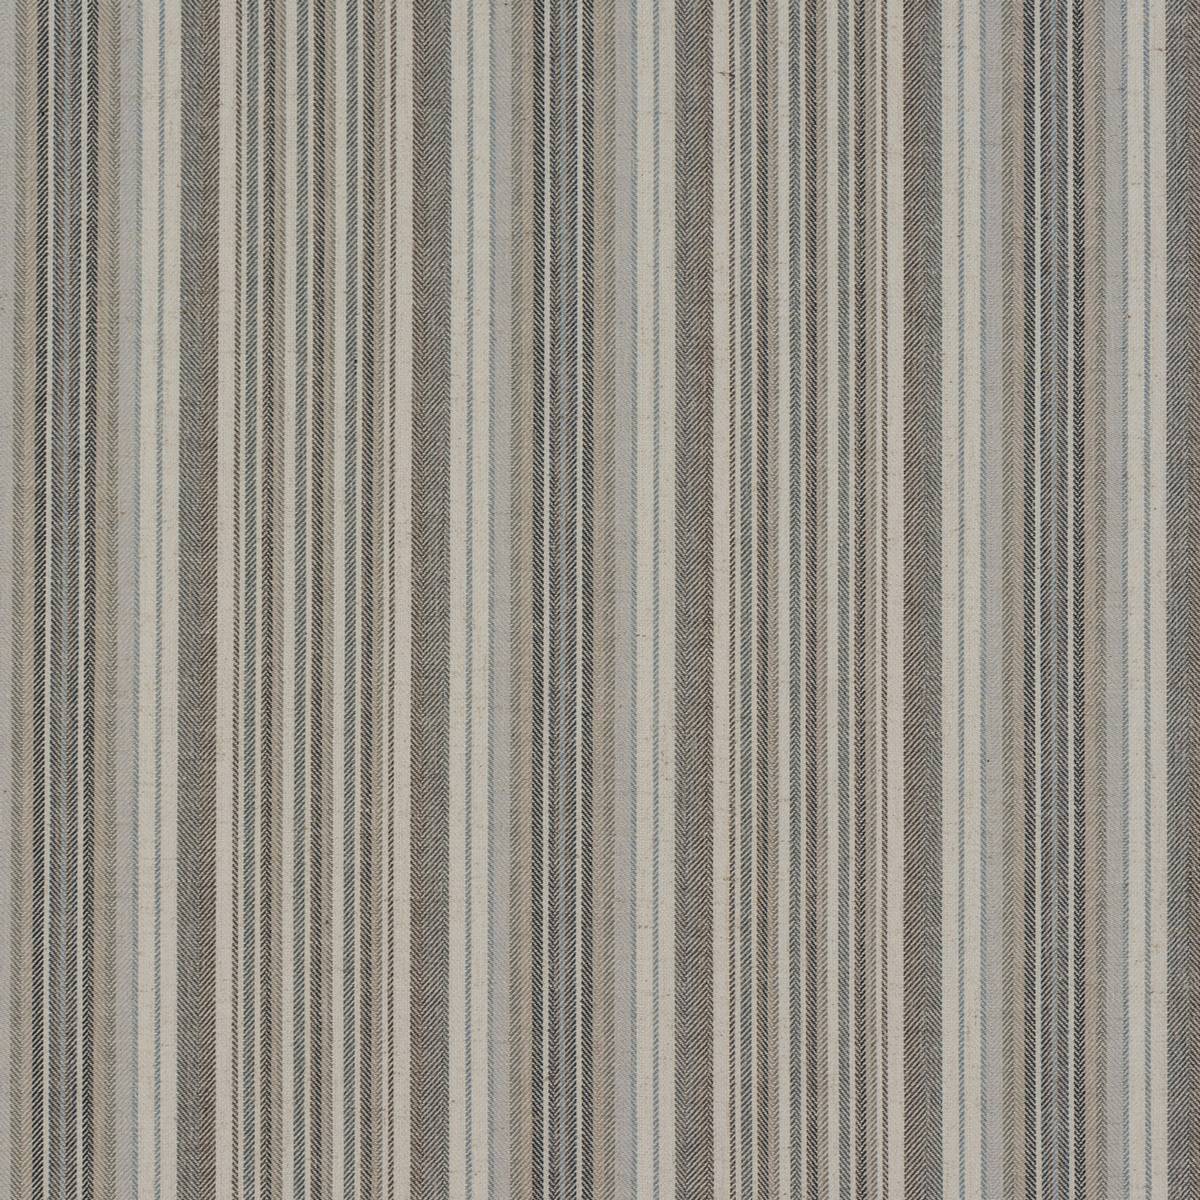 Kalahari Stripe Charcoal Fabric by Fryetts